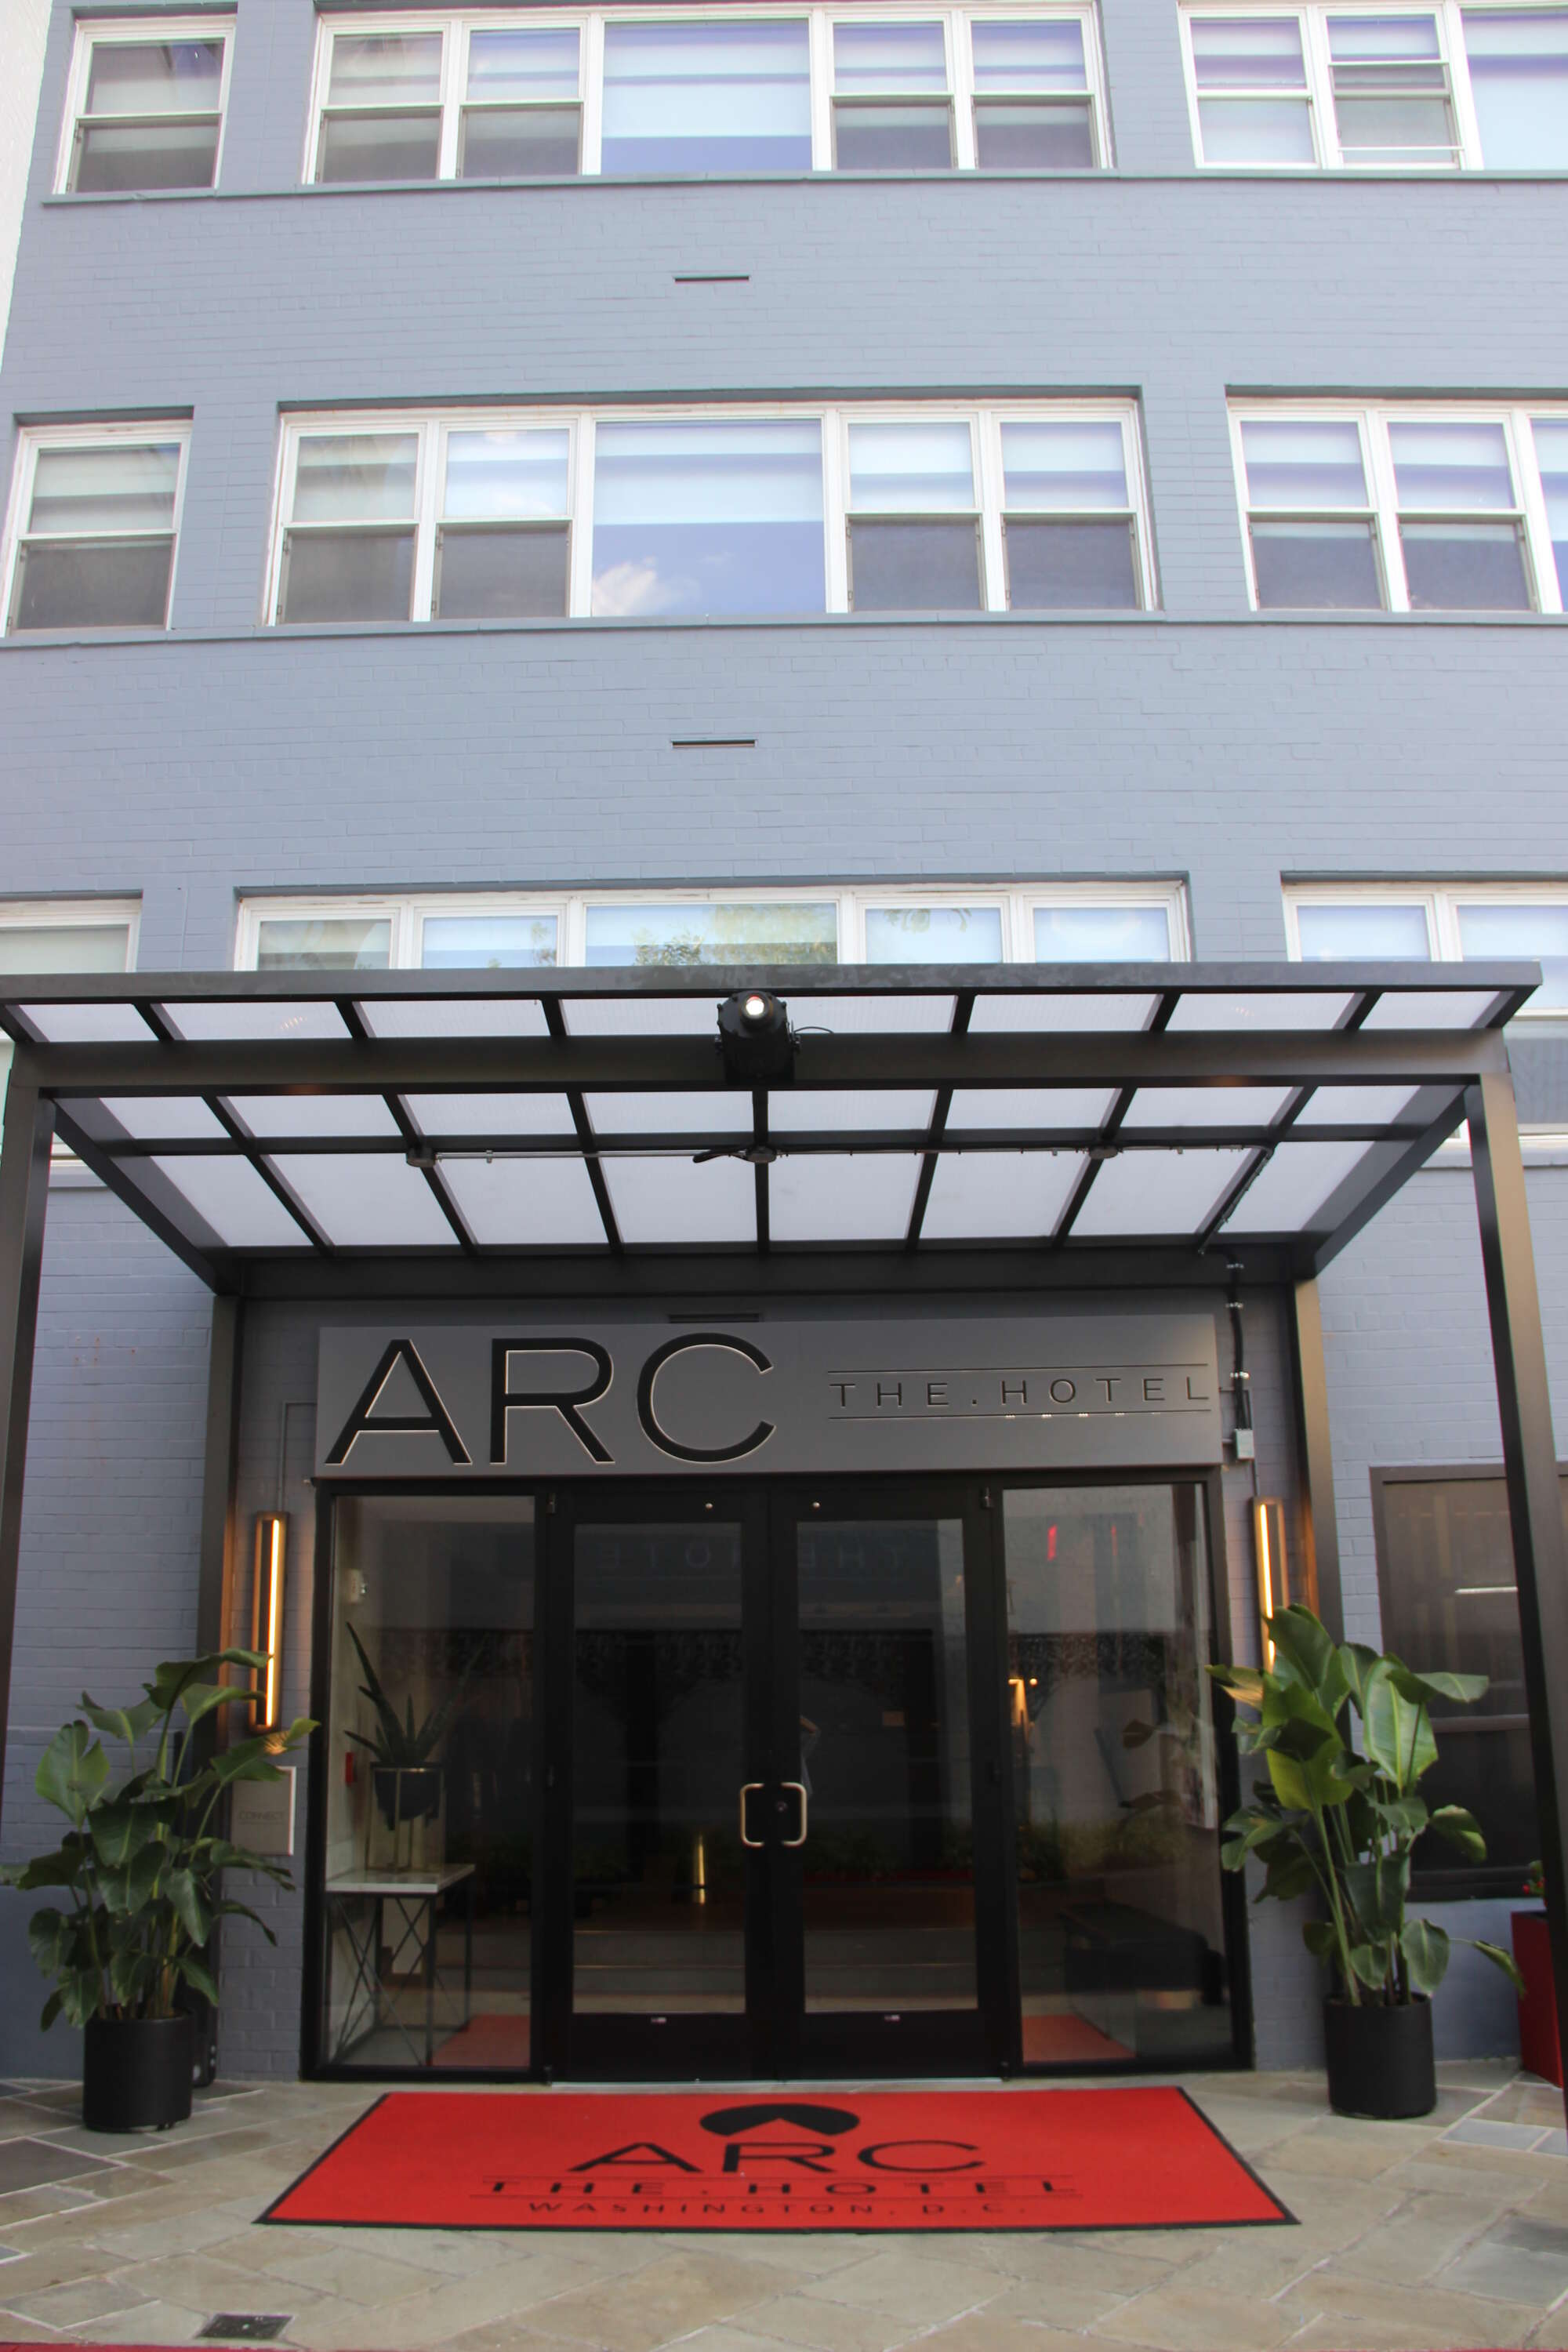 ARC HOTEL Entrance